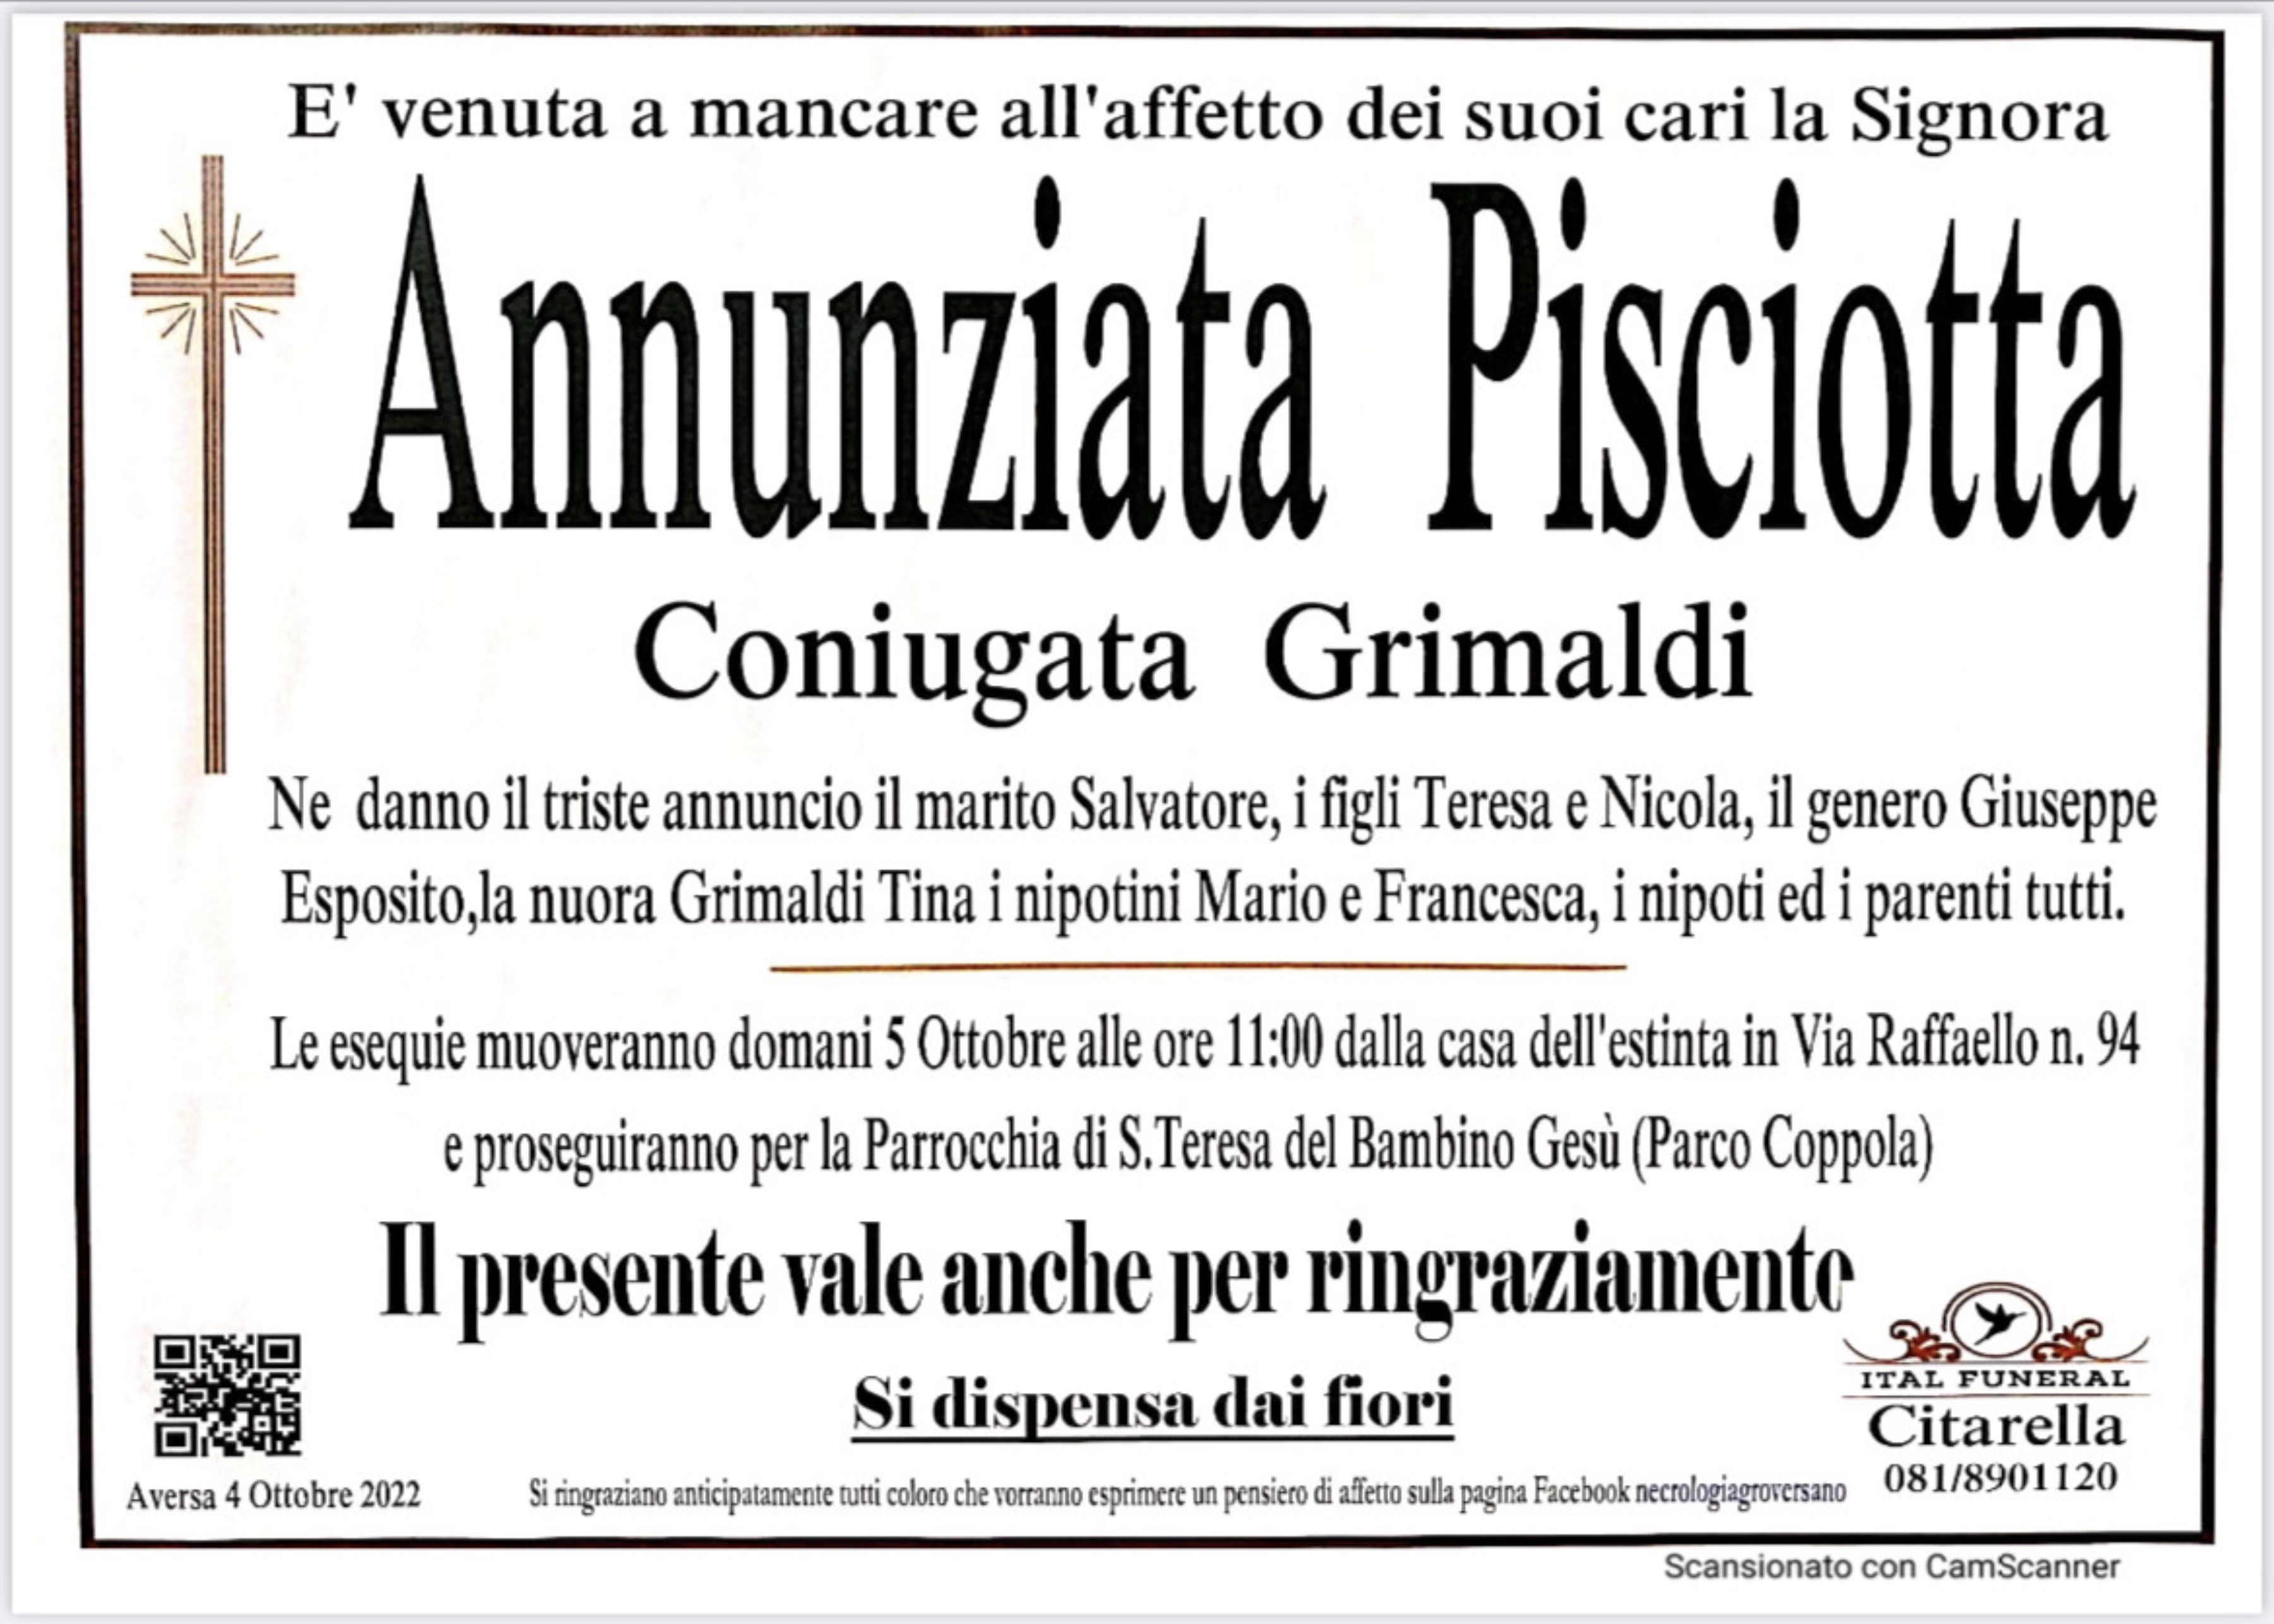 Annunziata Pisciotta